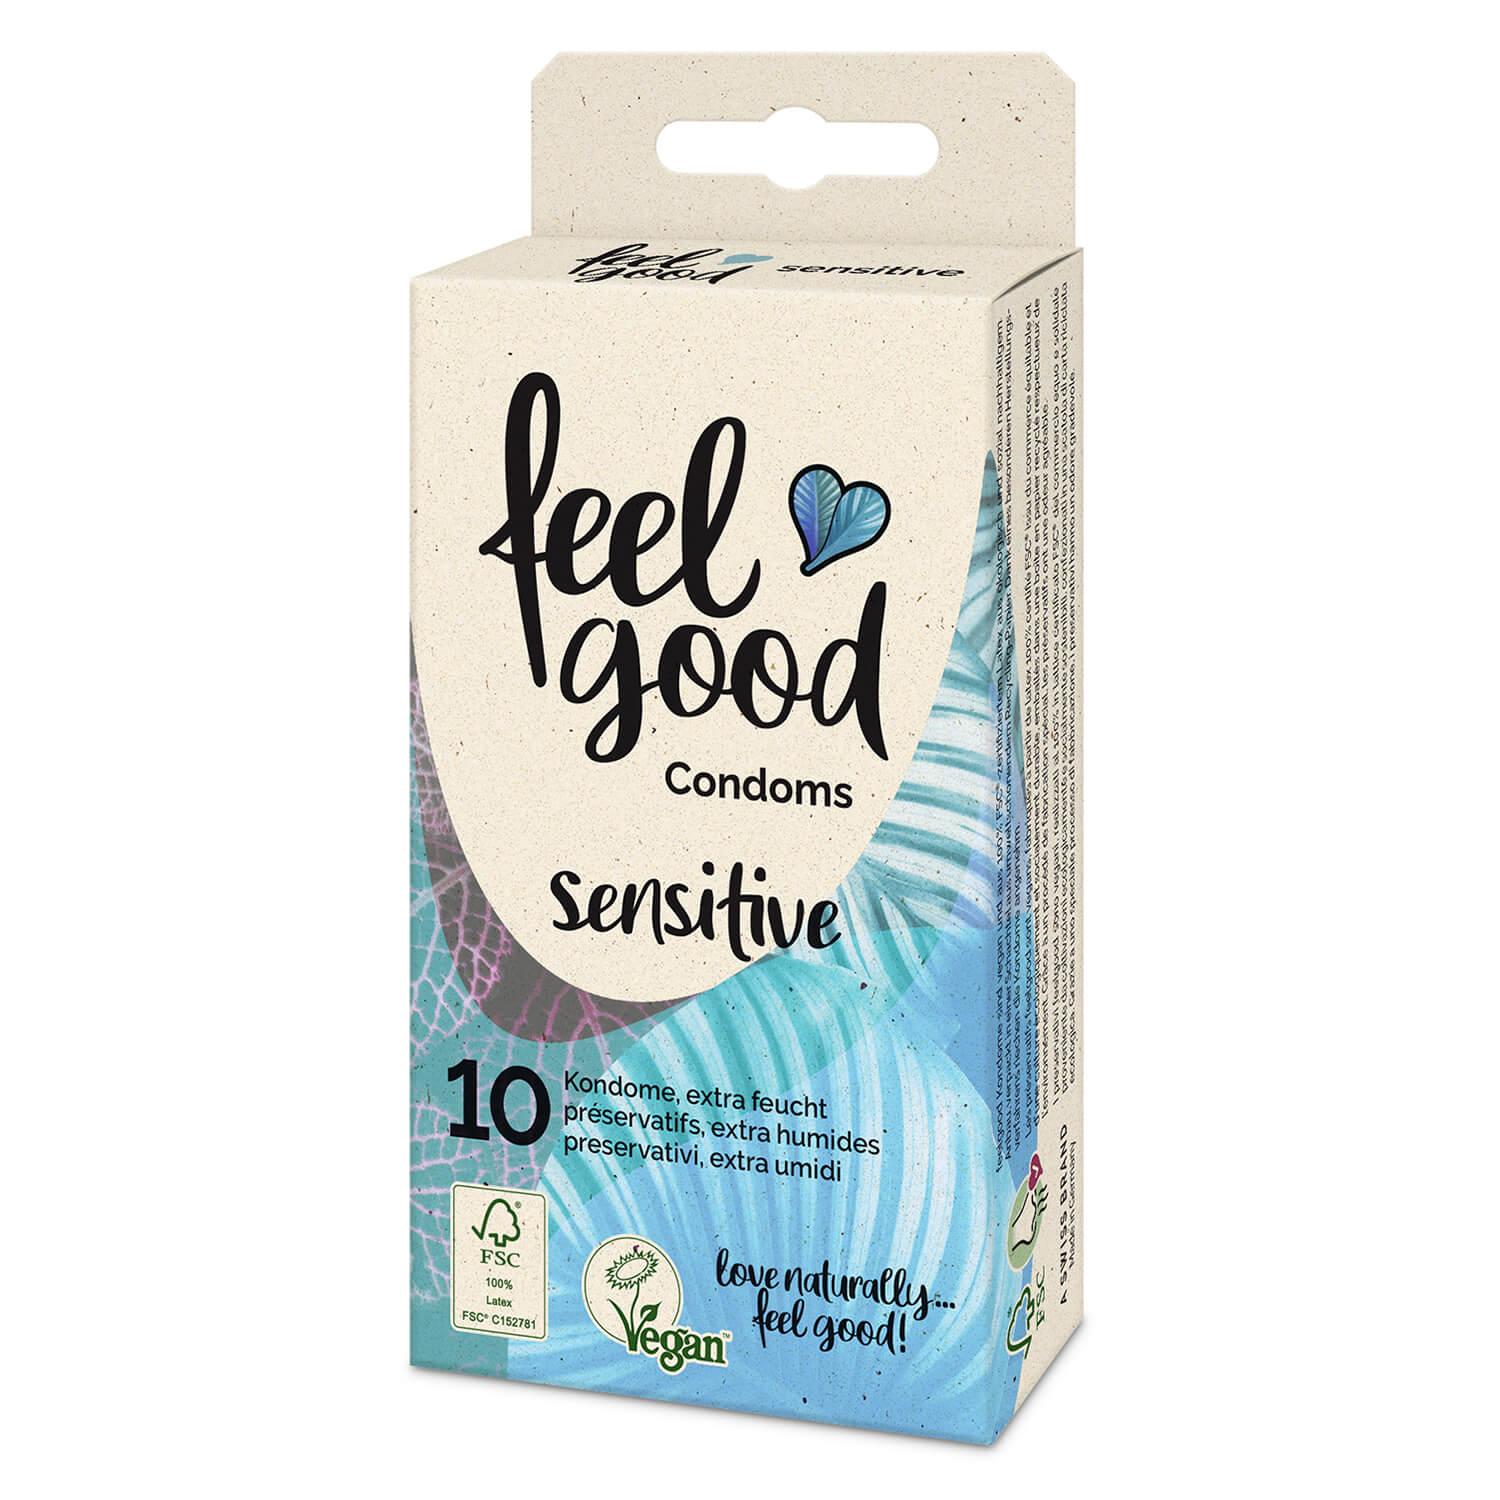 feelgood condoms - Condoms sensitive